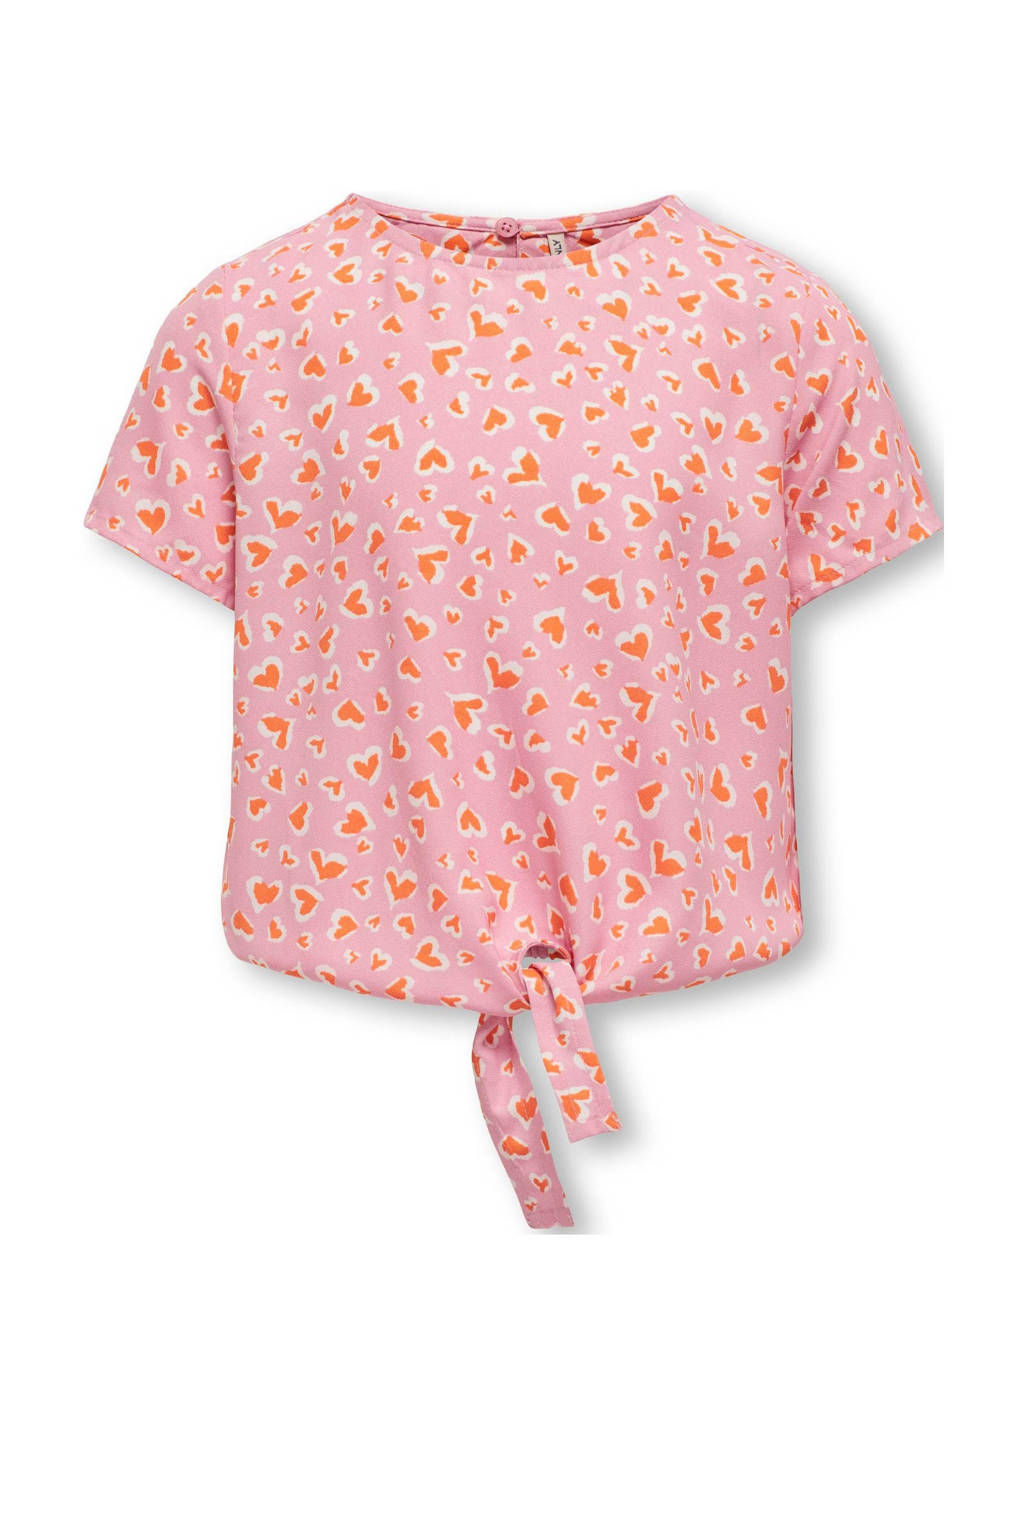 blouse KOGPALMA met all over print lichtroze/oranje/wit